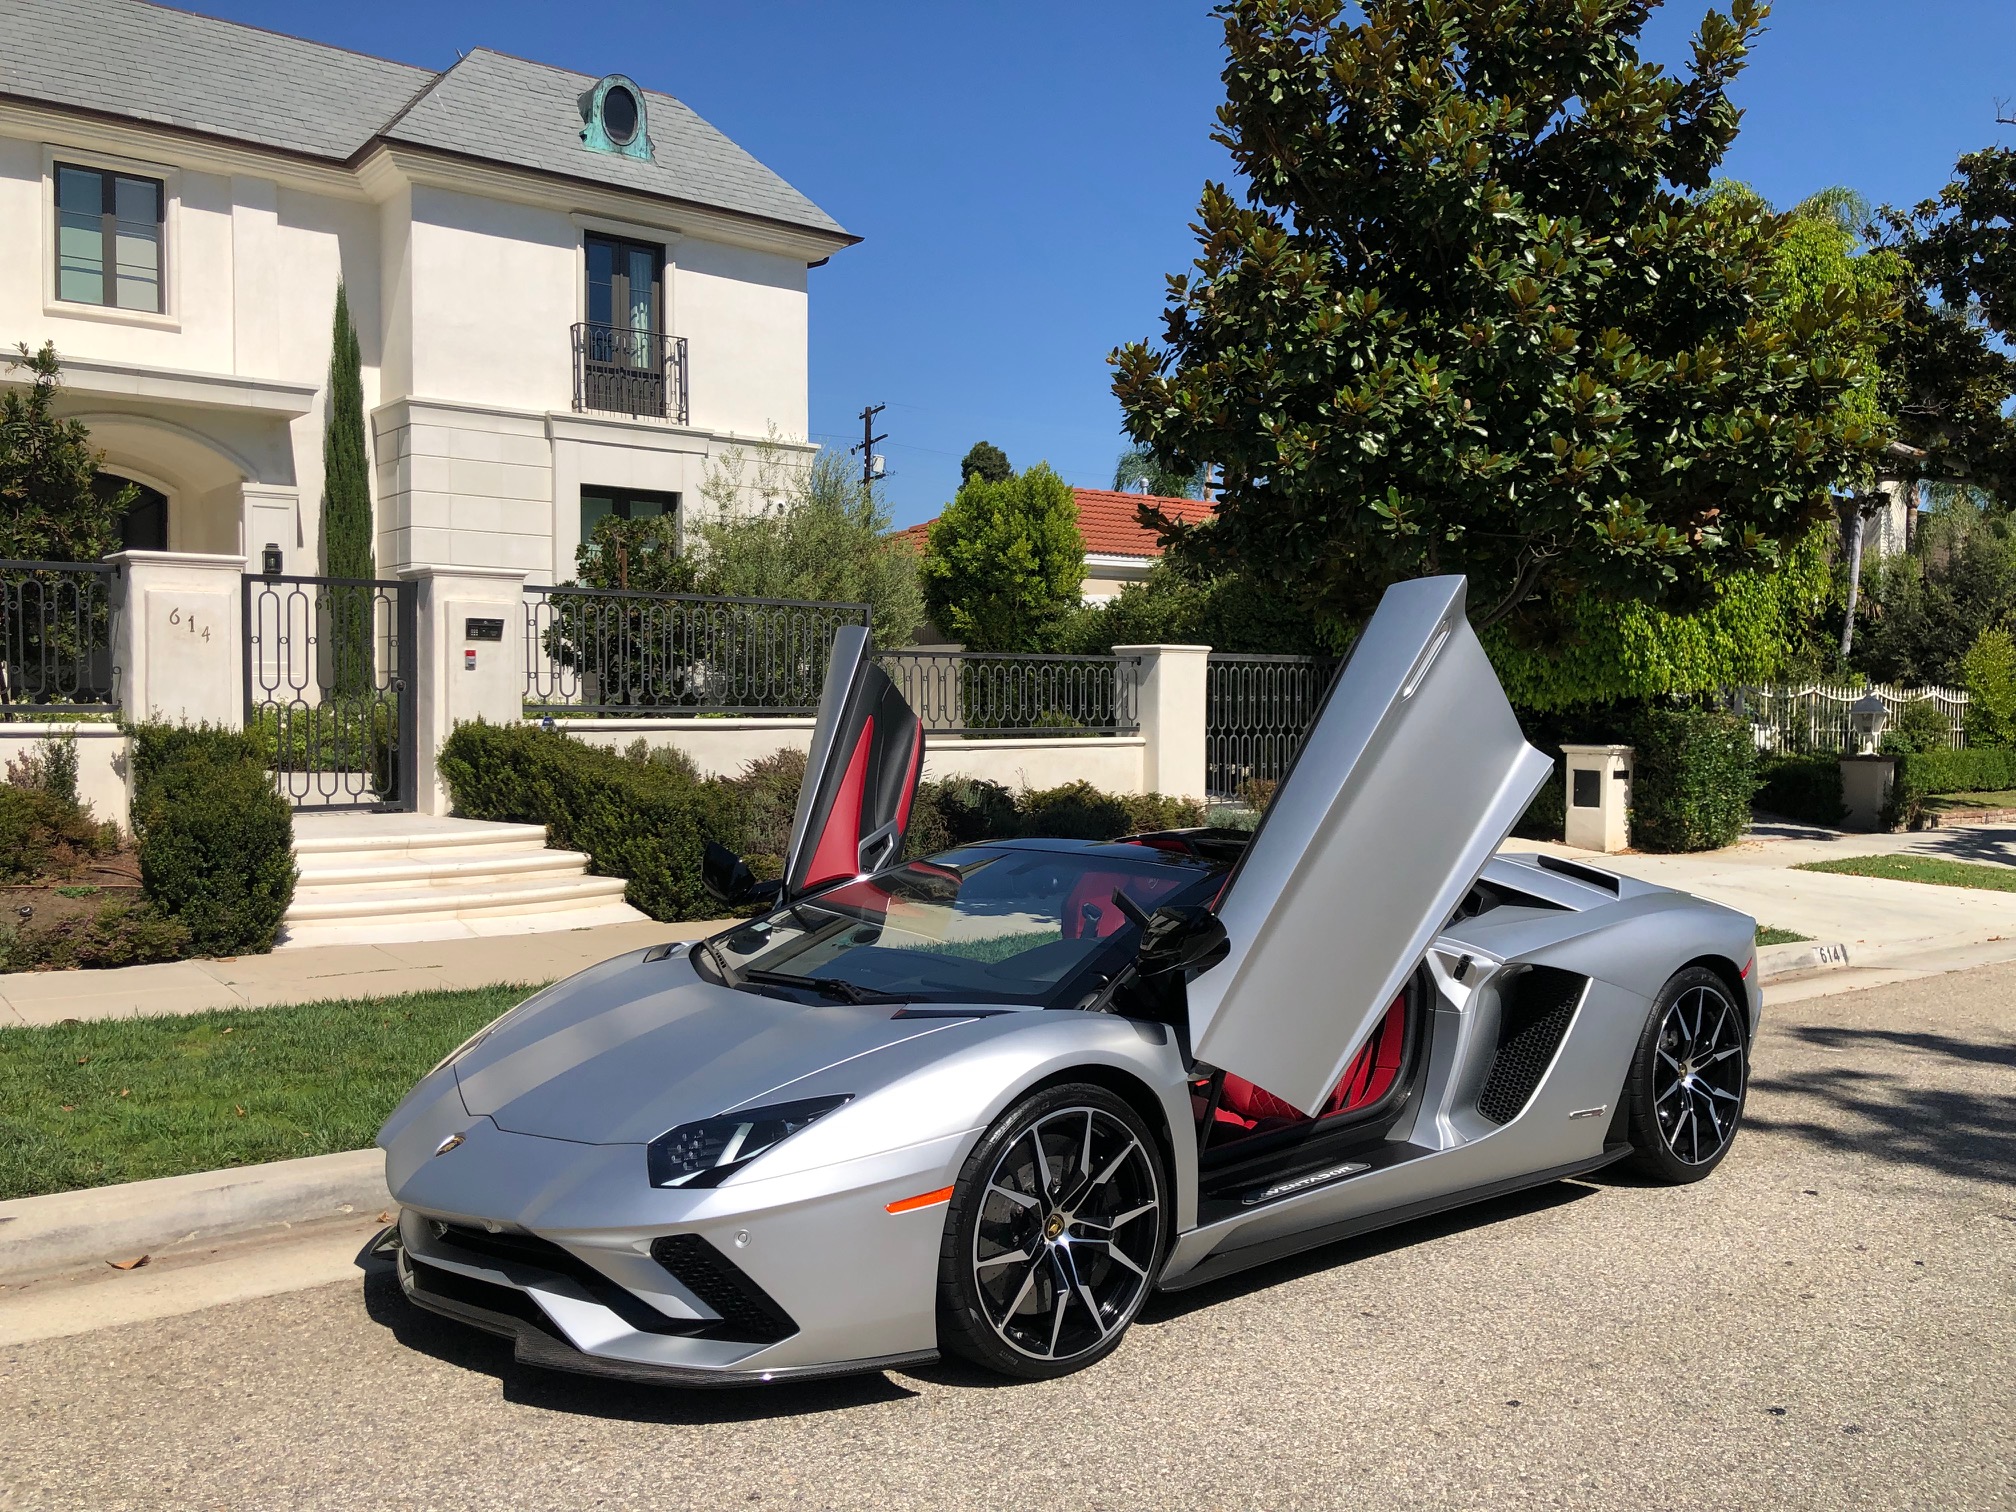 Lamborghini convertible rental in silver